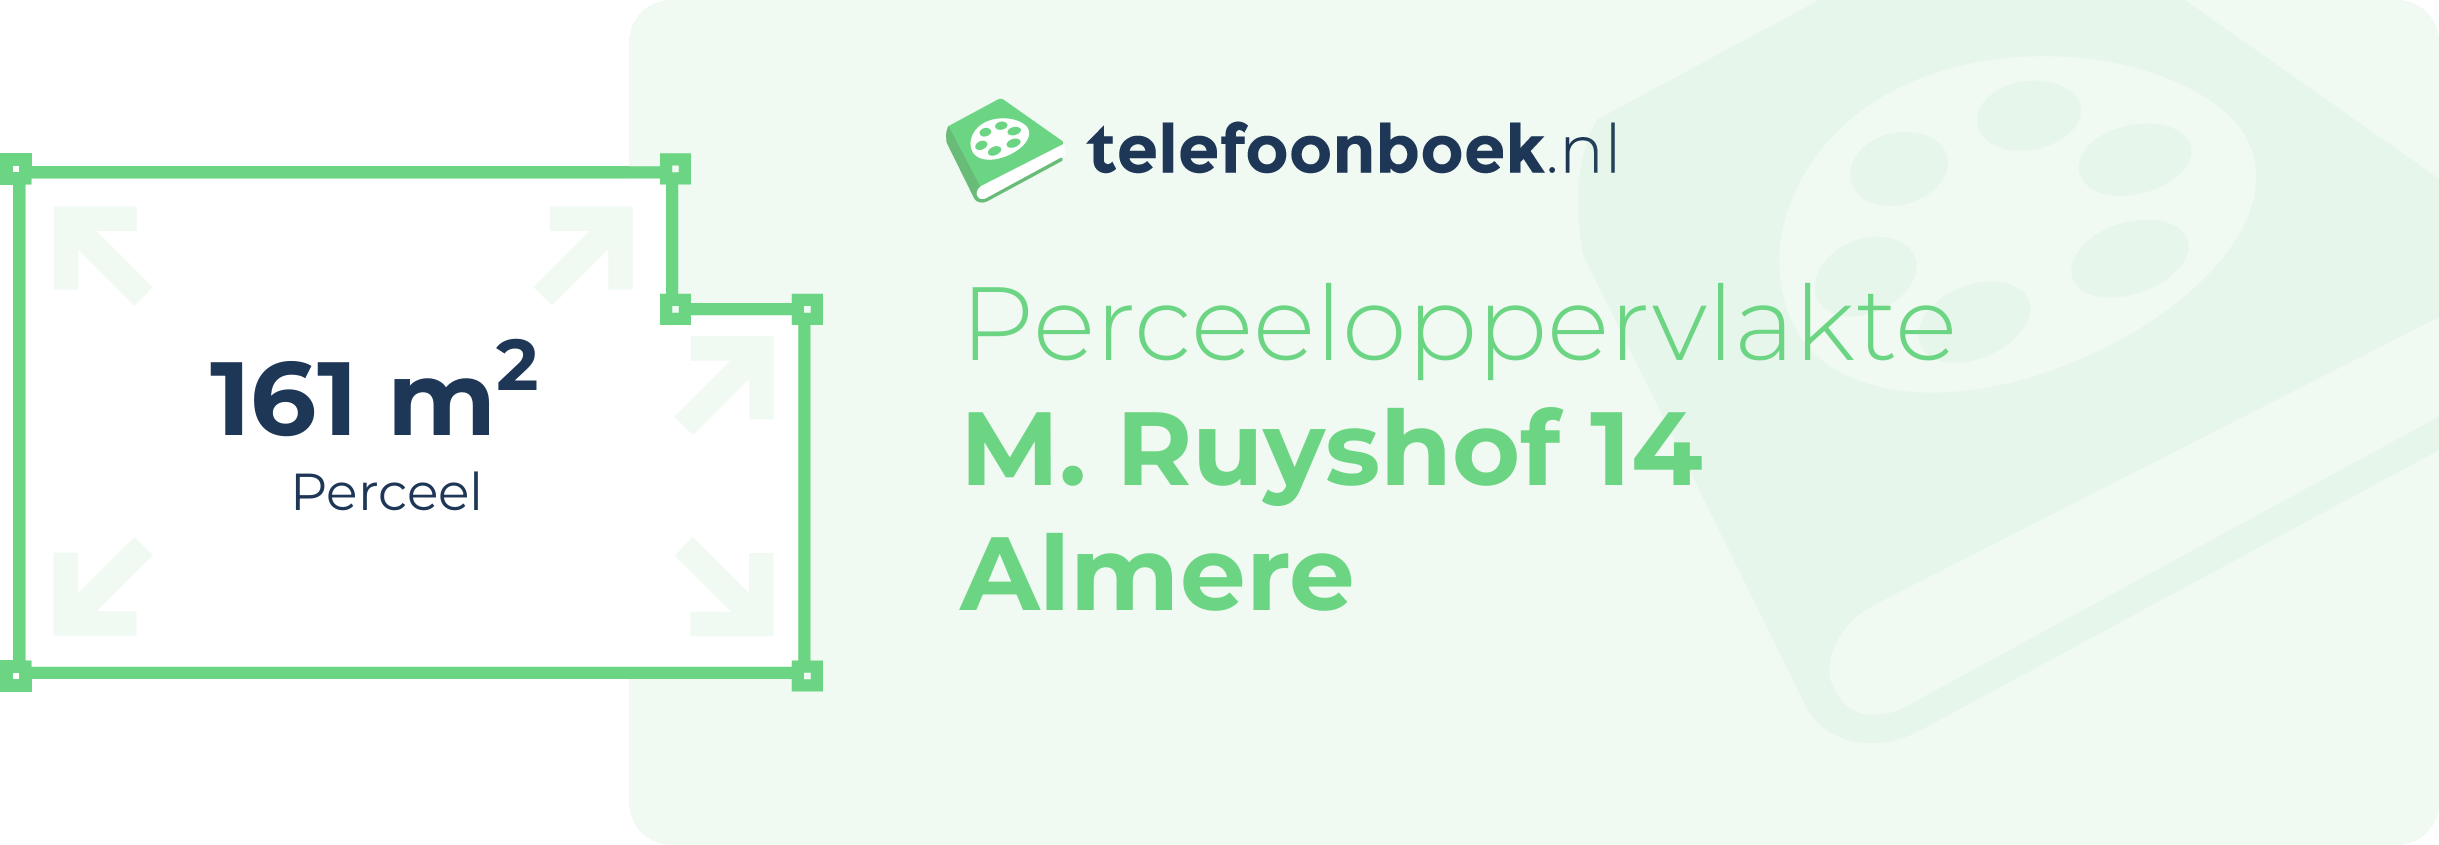 Perceeloppervlakte M. Ruyshof 14 Almere